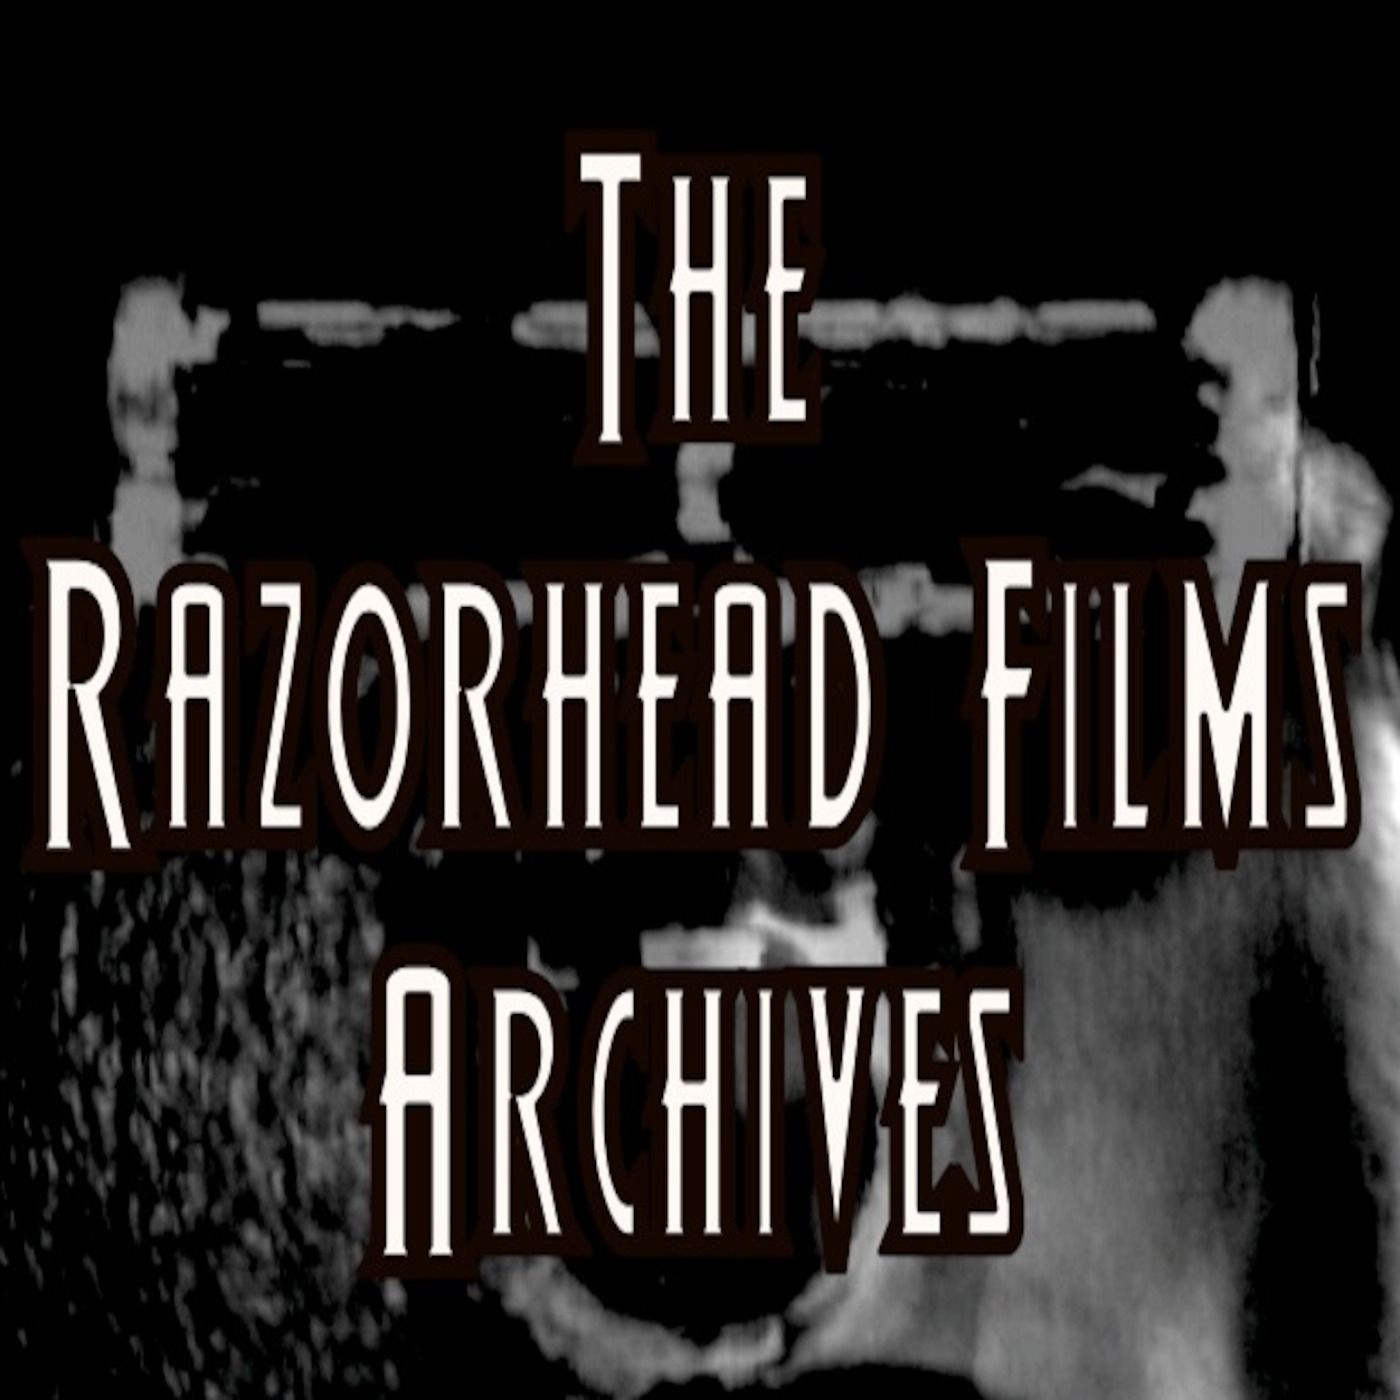 The Razorhead Films Archives:Adam Ezagouri